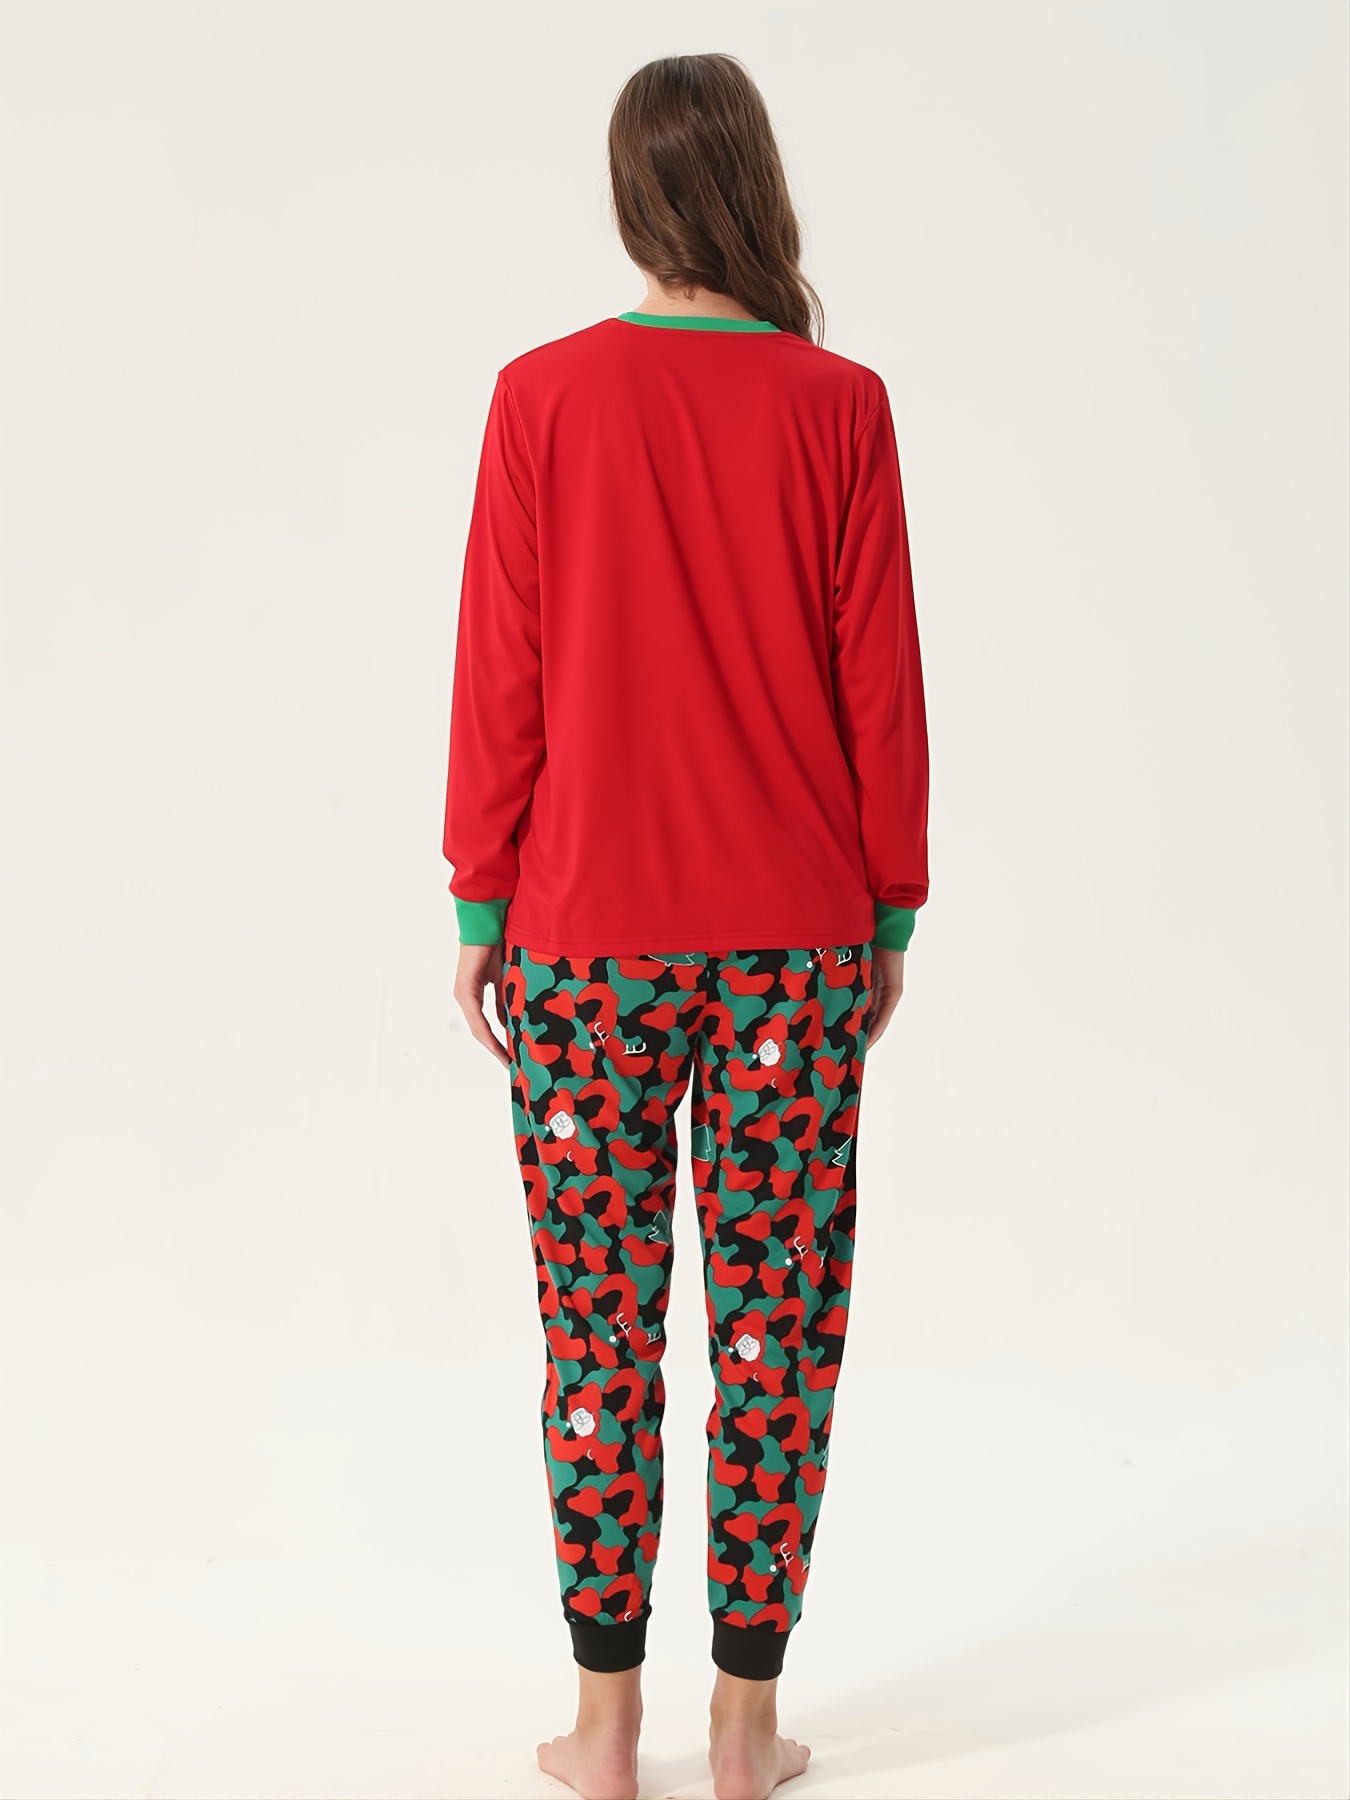 Women's Red Christmas Pajama Pants Loungewear, Cute Lounge Pants